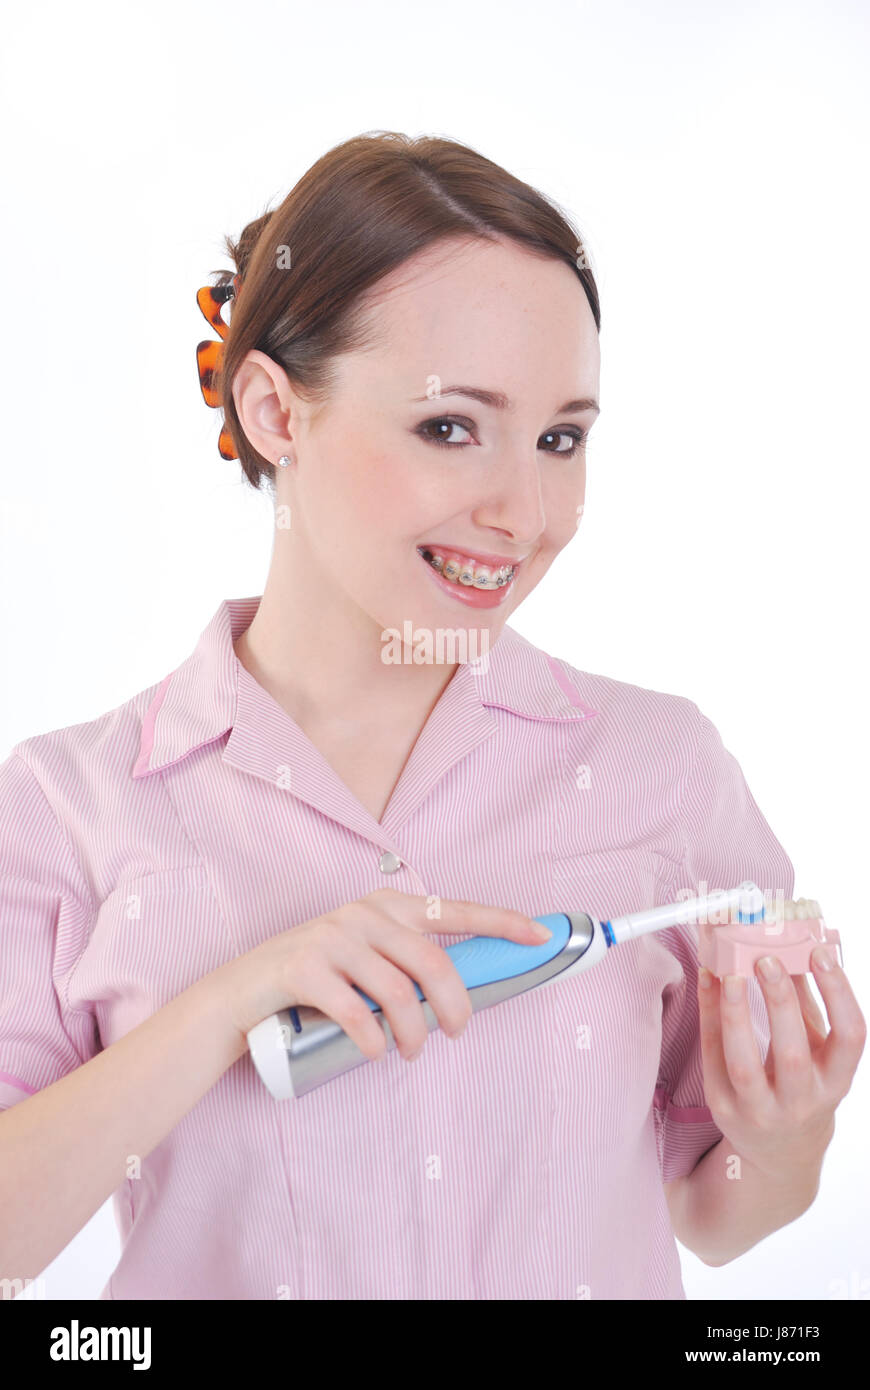 uniform, electric, toothbrush, dentures, nurse, maddening, pert, coquettish, Stock Photo